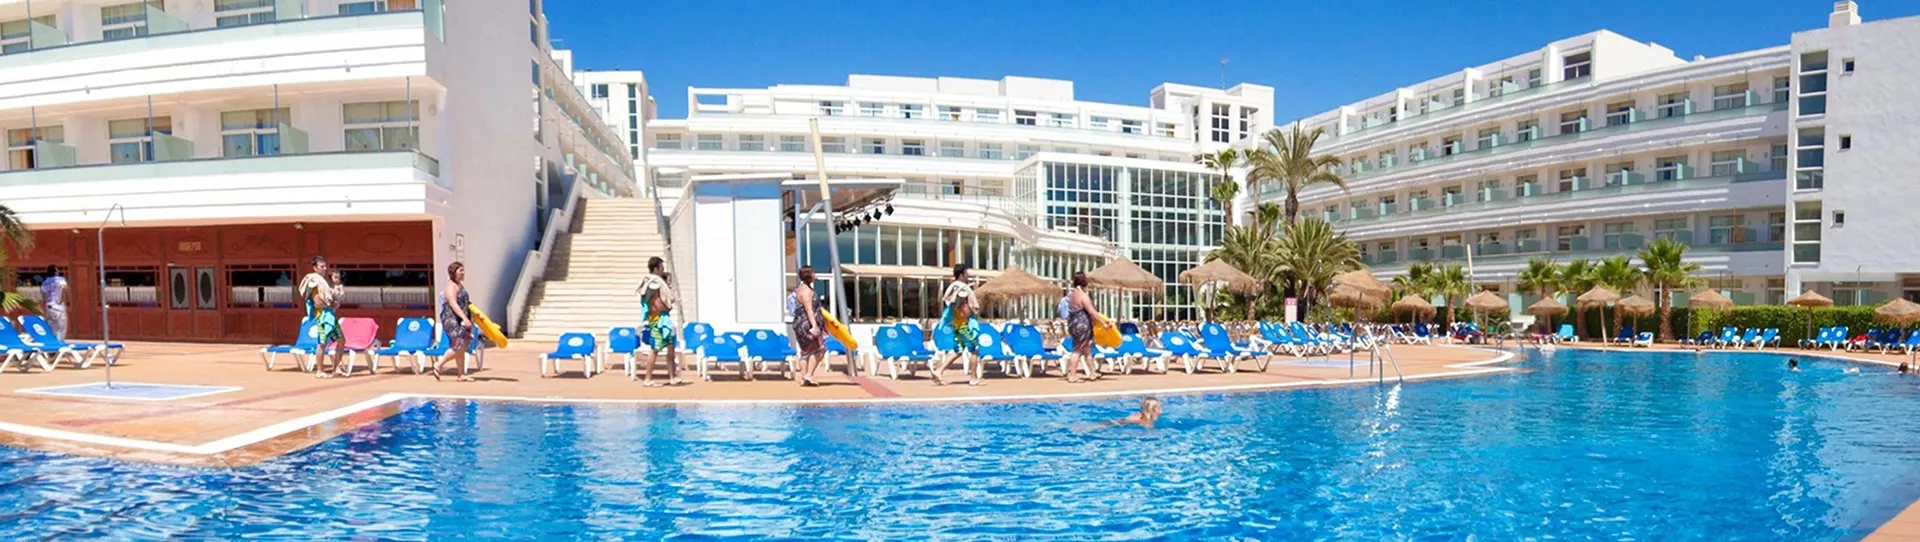 Spain golf holidays - Hotel Marina Playa - Photo 1